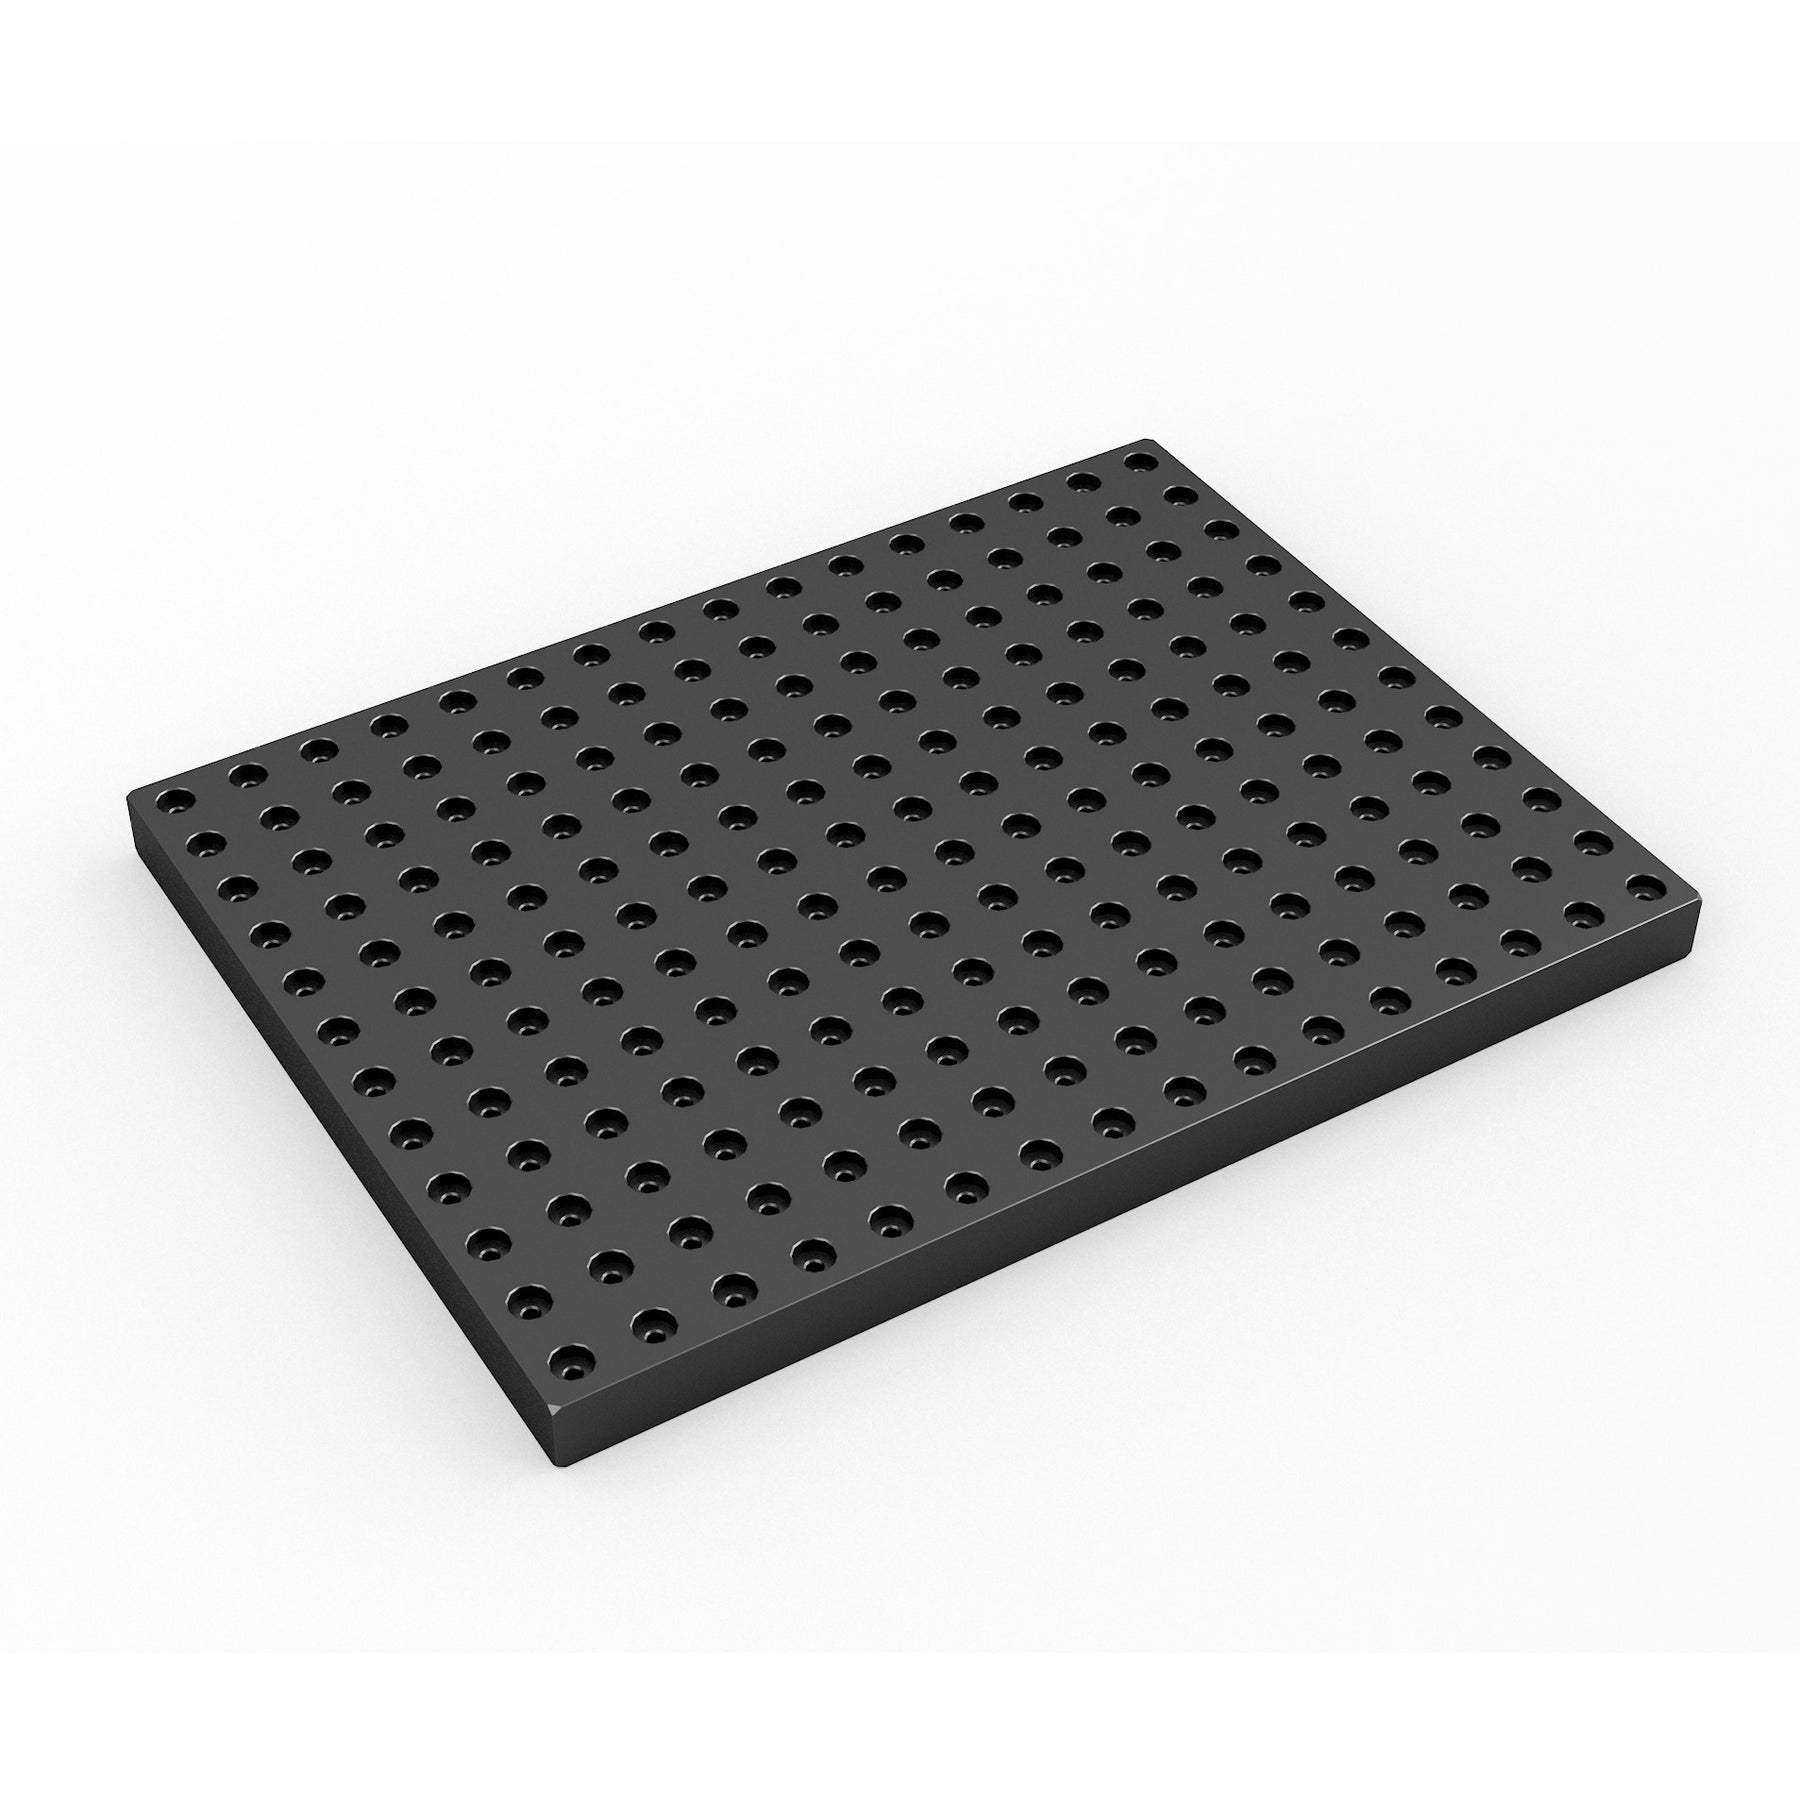 CMM Fixture Grid base plate 25x700x900mm